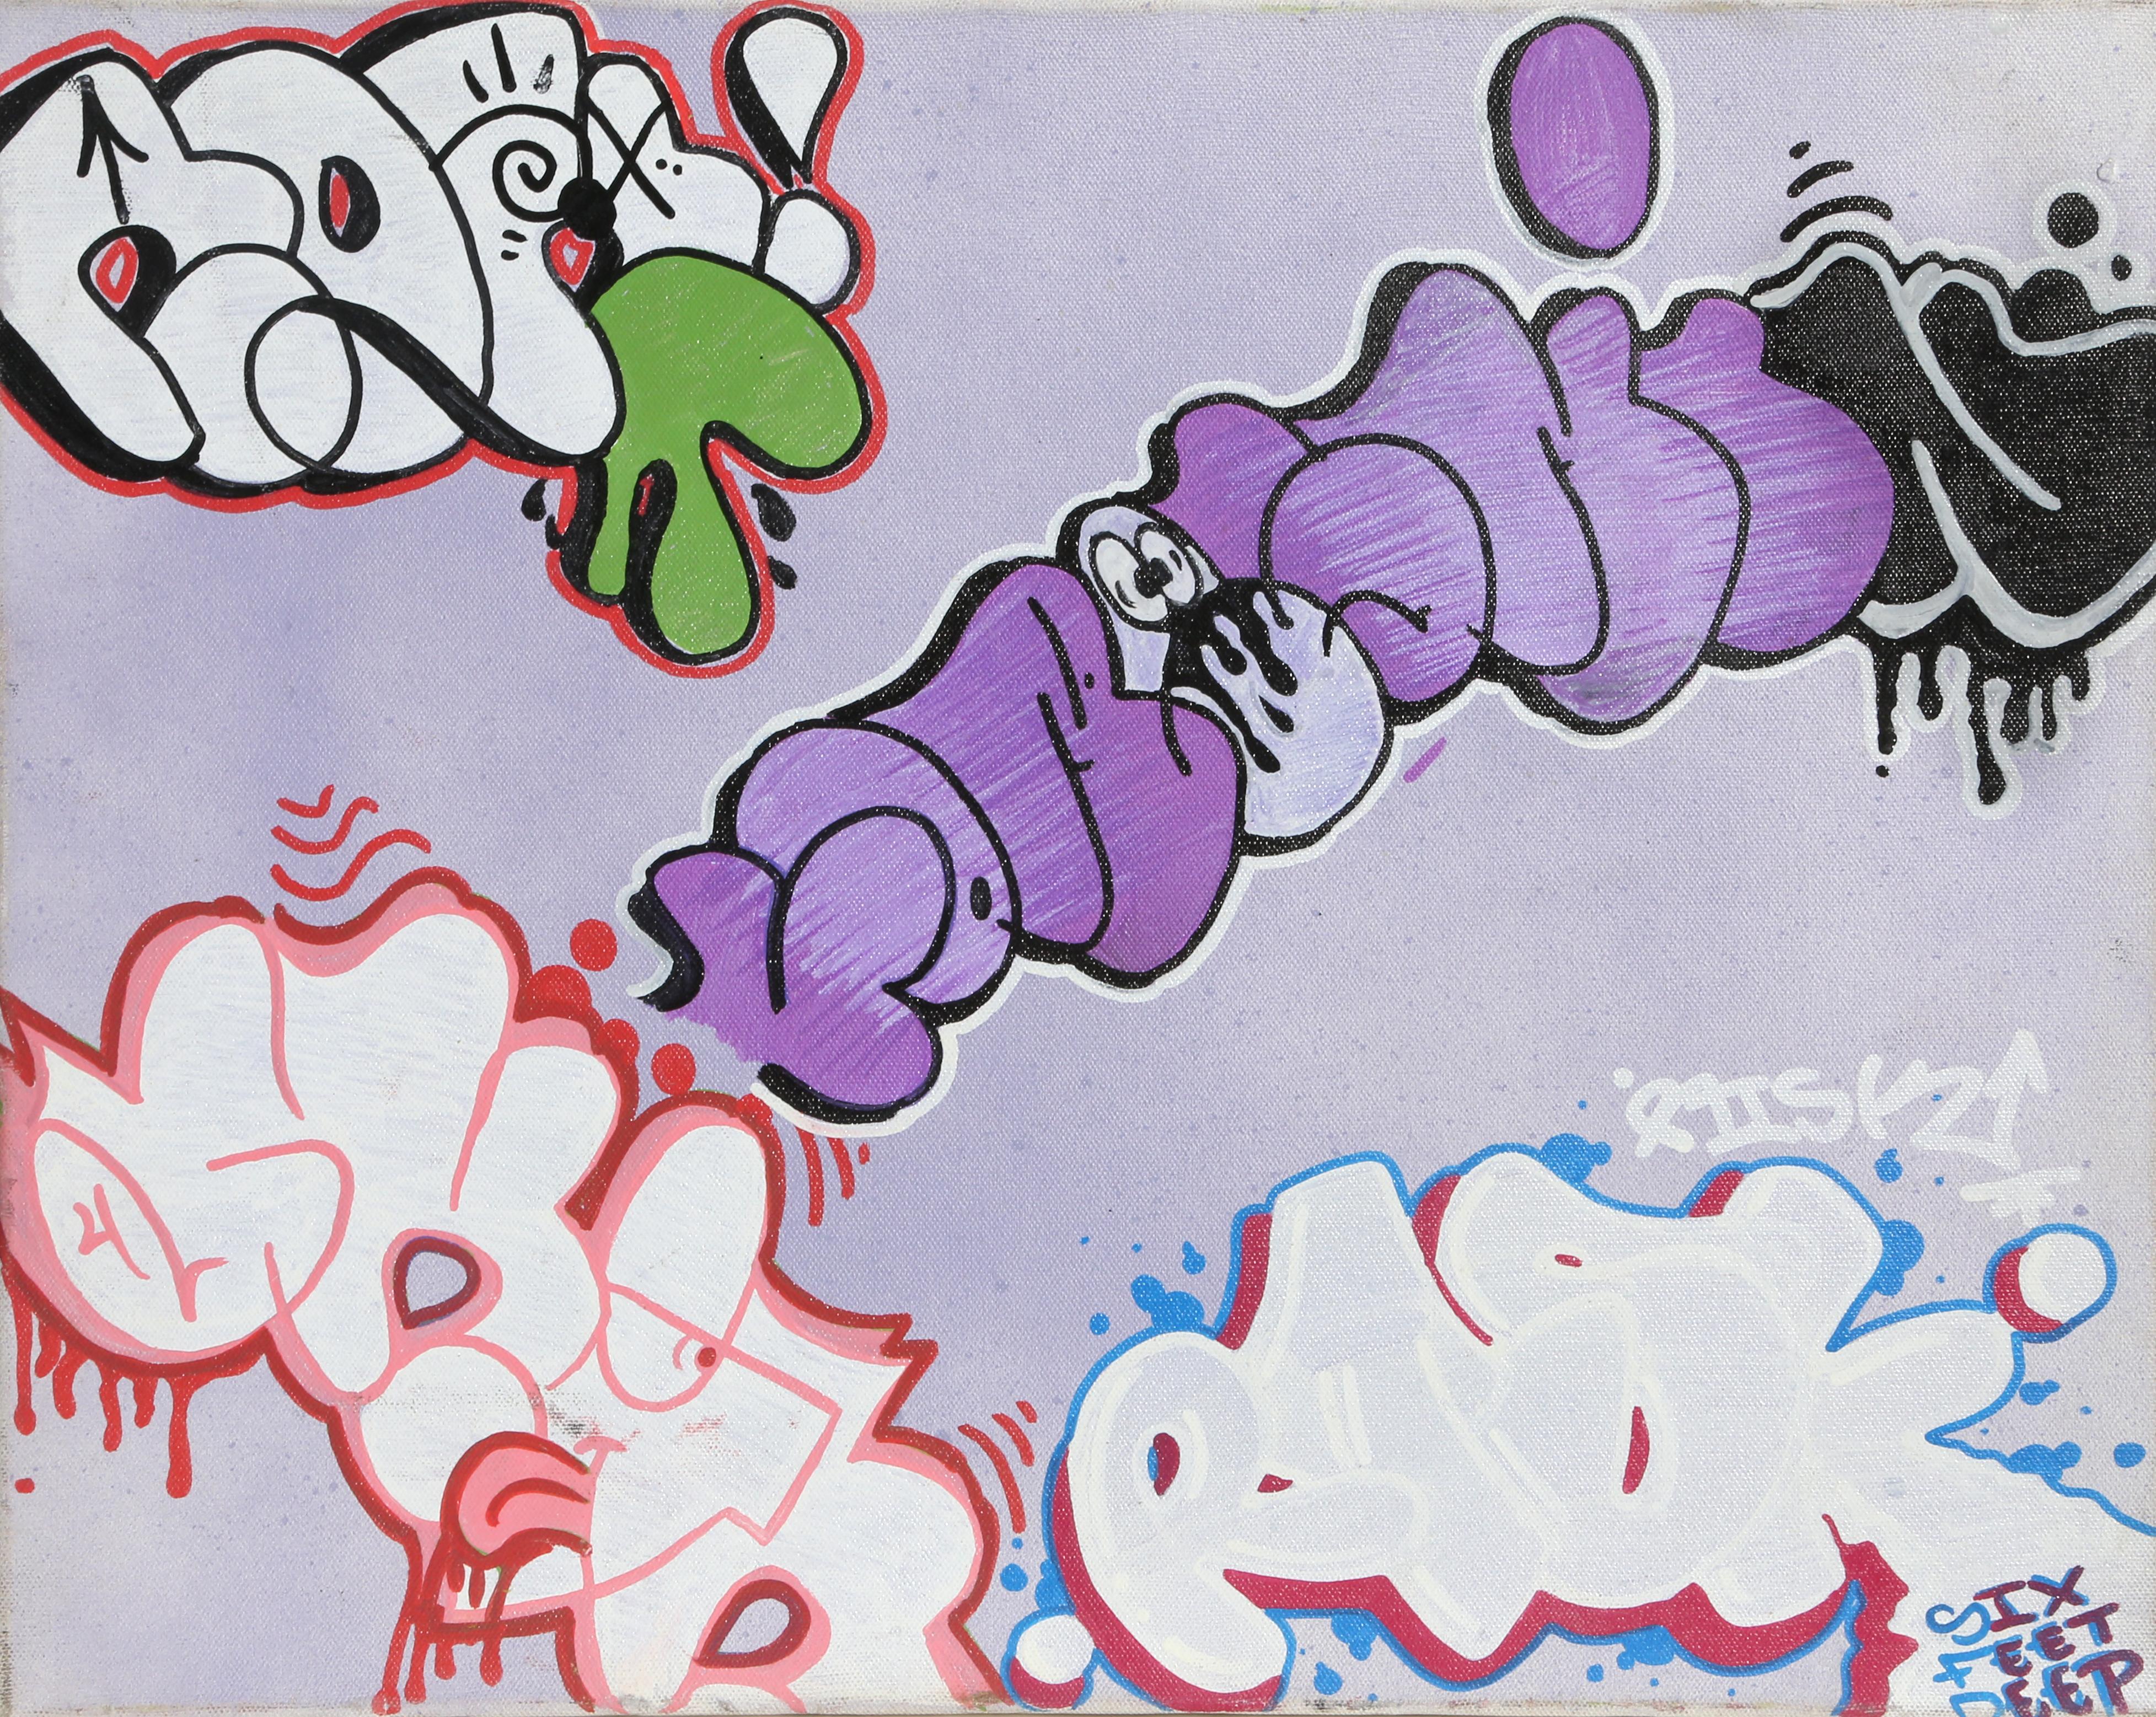 Risk, Mixed Media-Graffiti-Gemälde auf Leinwand